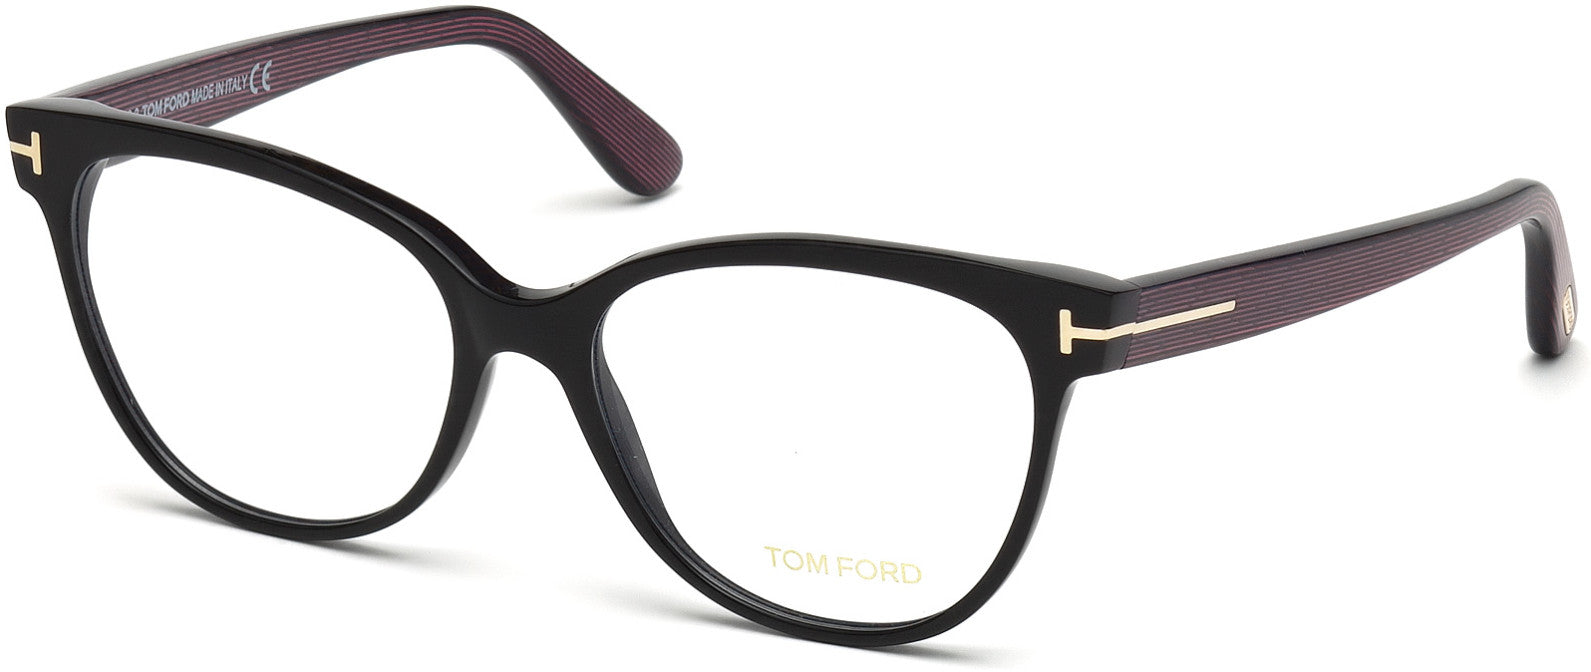 Tom Ford FT5291 Cat Eyeglasses 005-005 - Shiny Black, Iridescent Chalkstripe Blue-Violet